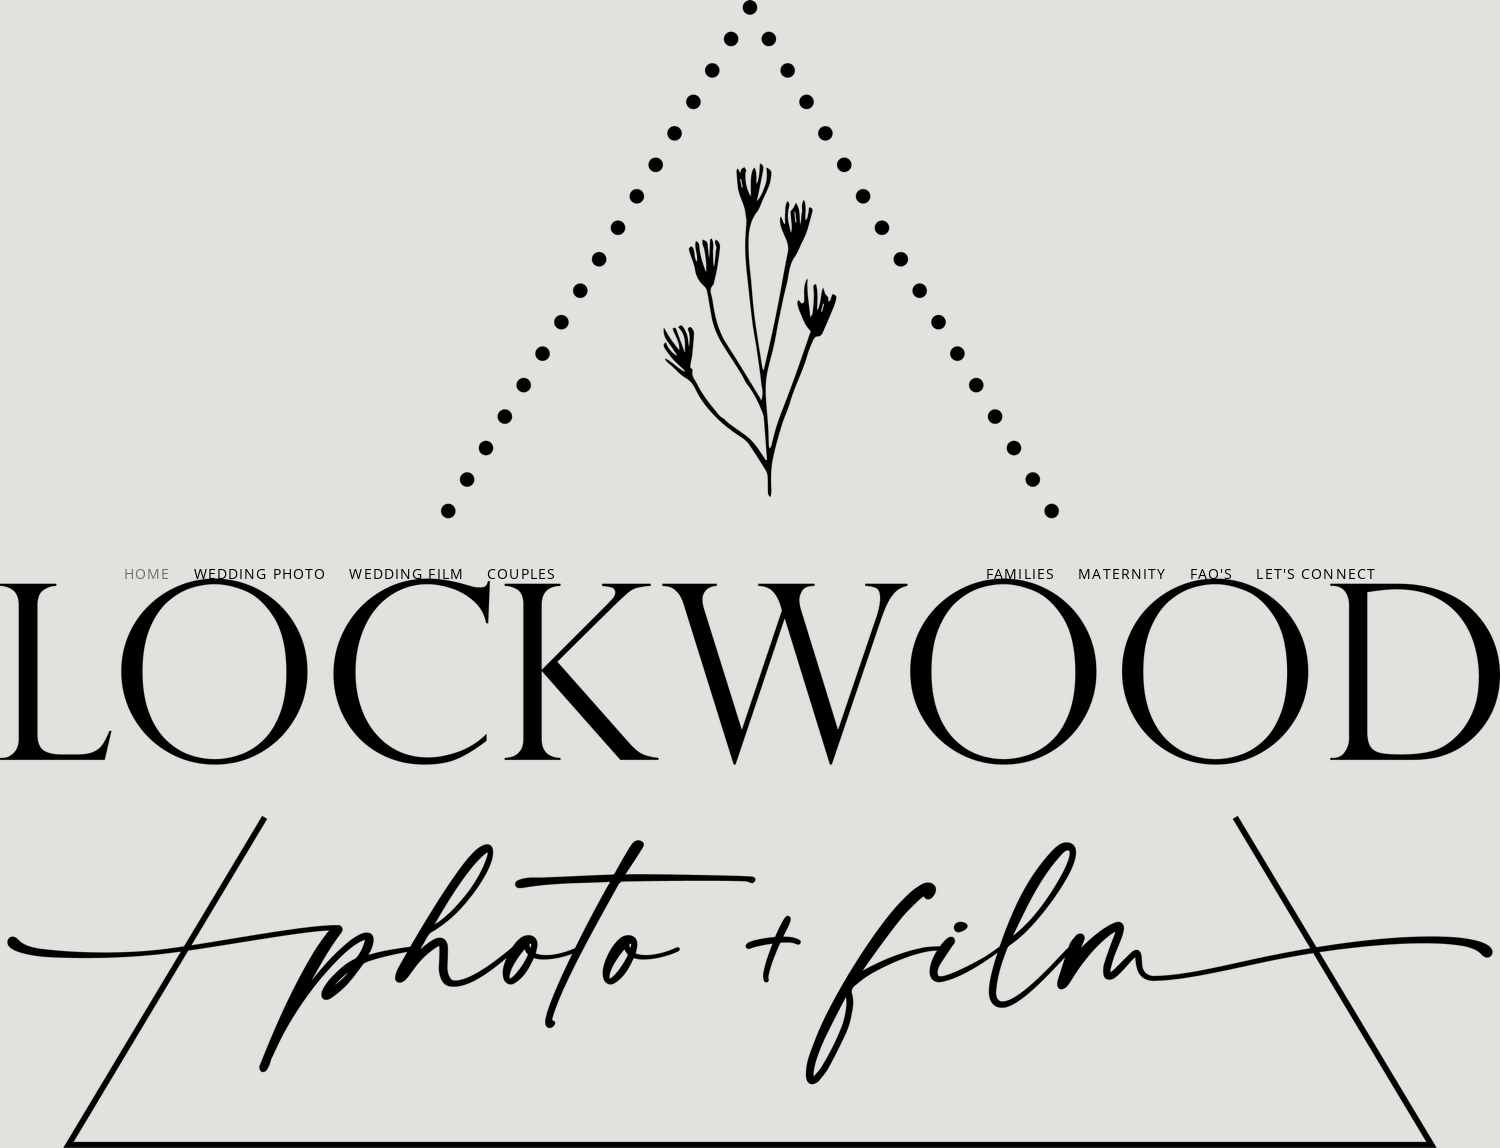 Lockwood Photo + Film Logo